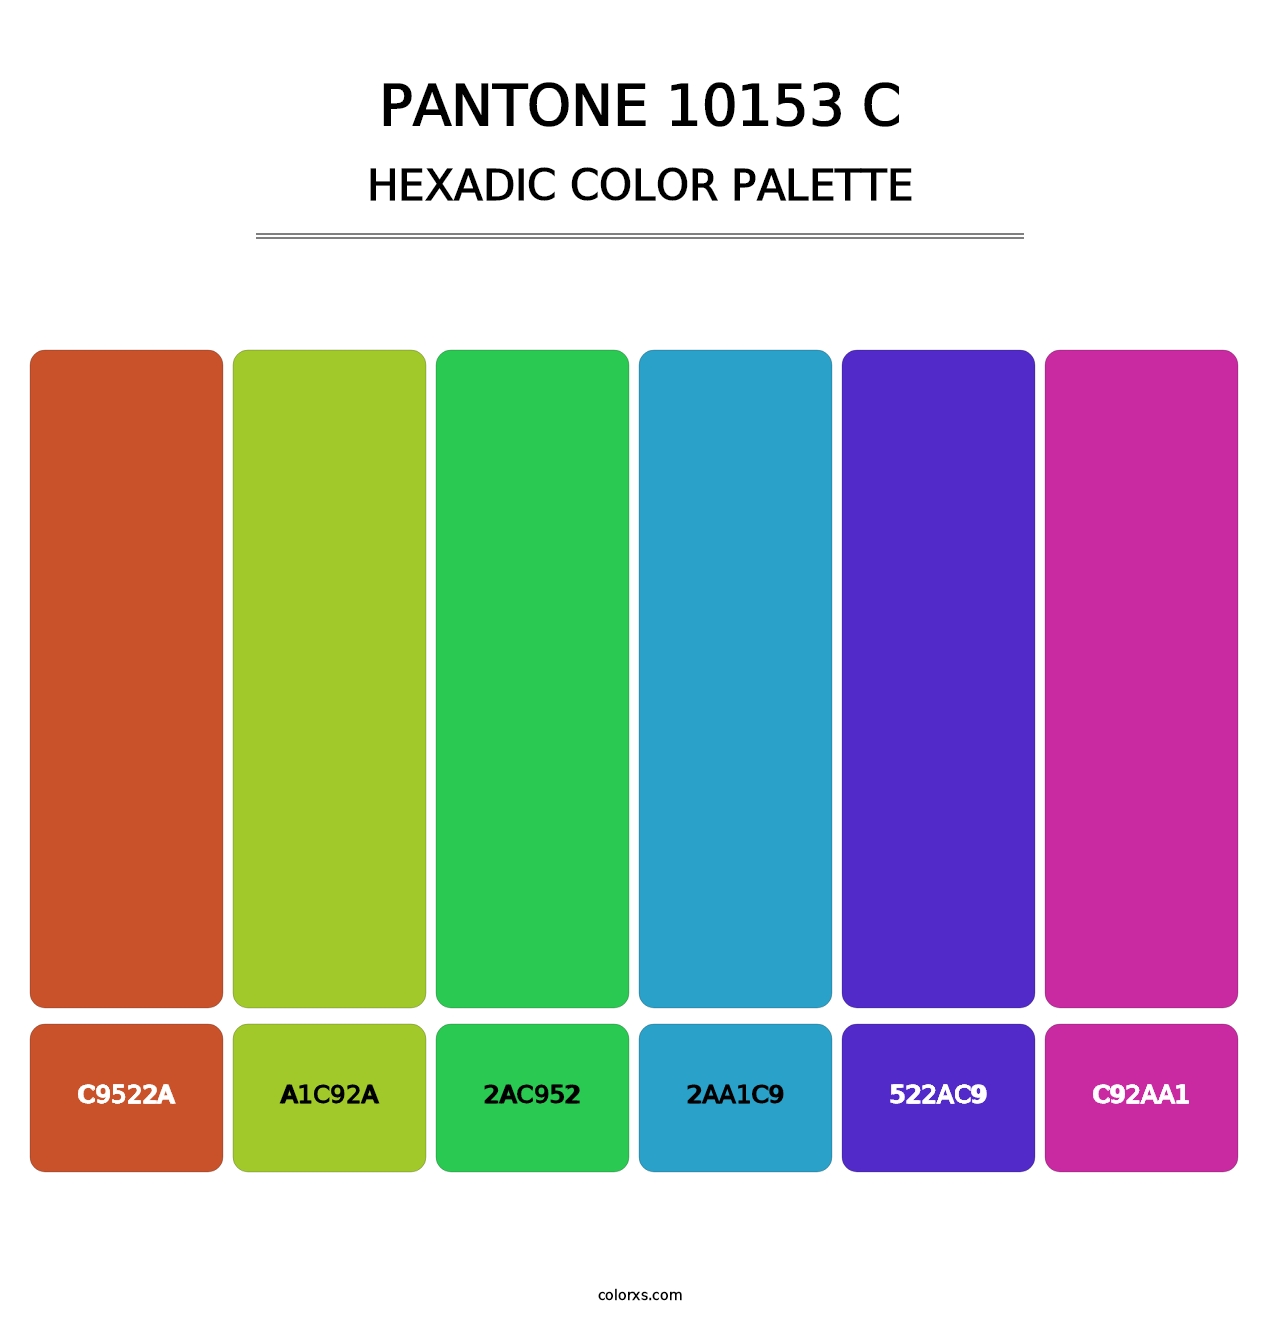 PANTONE 10153 C - Hexadic Color Palette